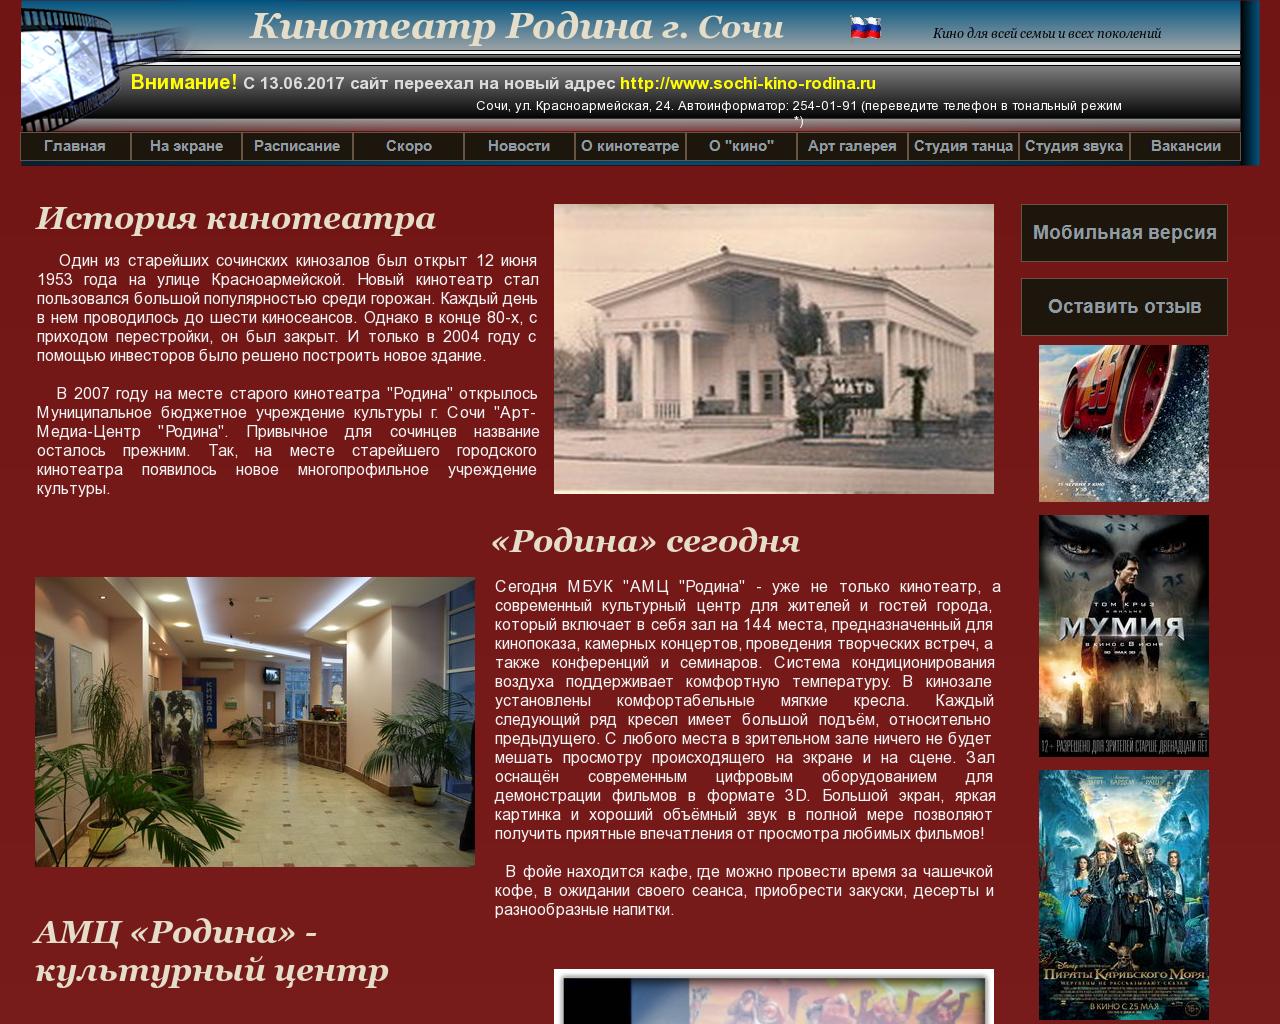 Изображение сайта soch-kino-rodina.ru в разрешении 1280x1024